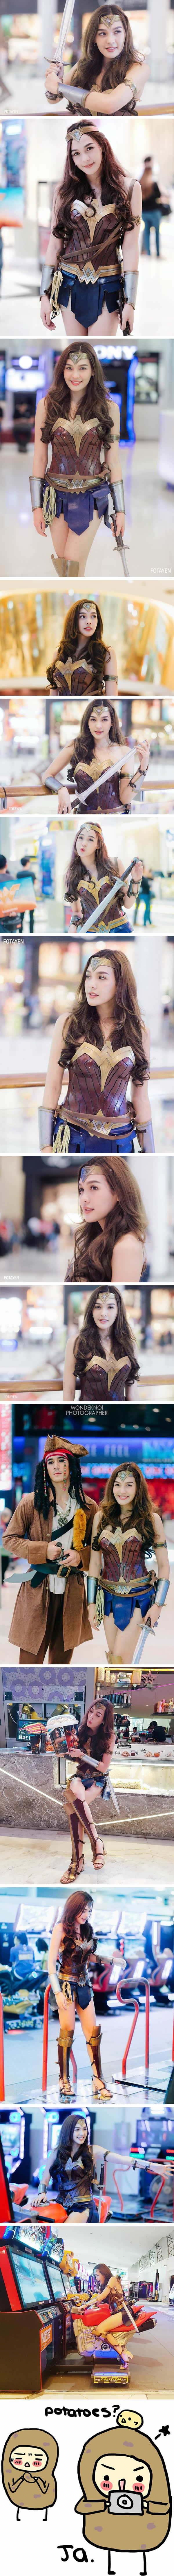 Stunning Wonder Woman cosplay will make you fall in love with Diana: Please meet Pichyada Chatlkamjaroen (Rae)